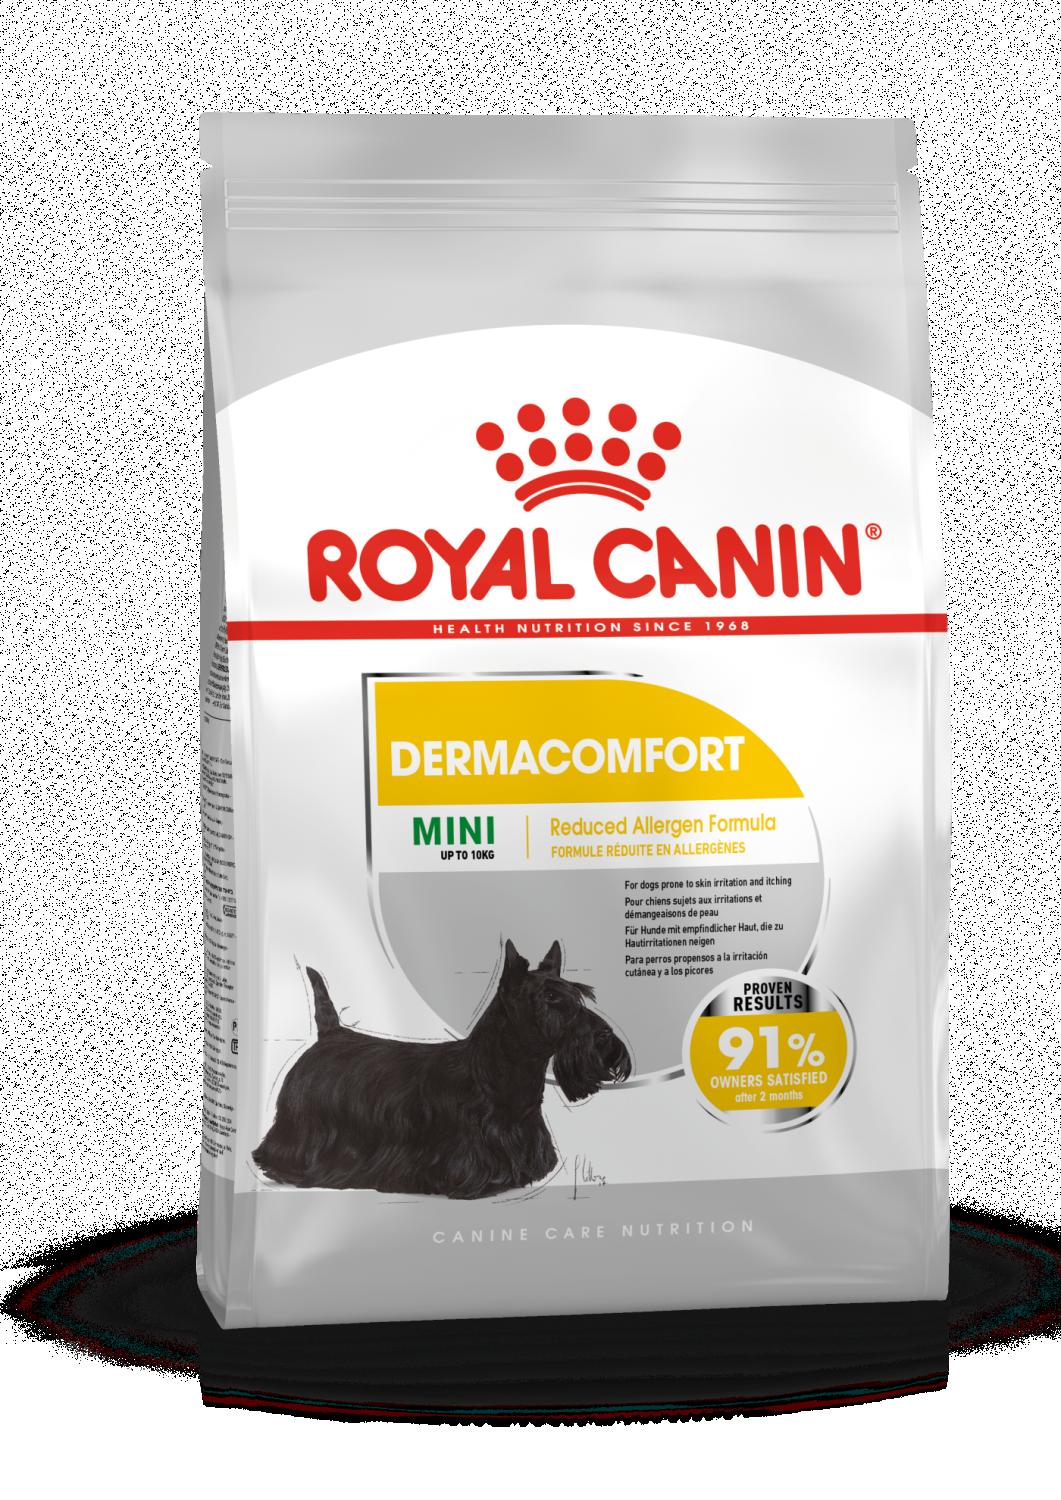 Royal Canin Dermacomfort Mini 8kg